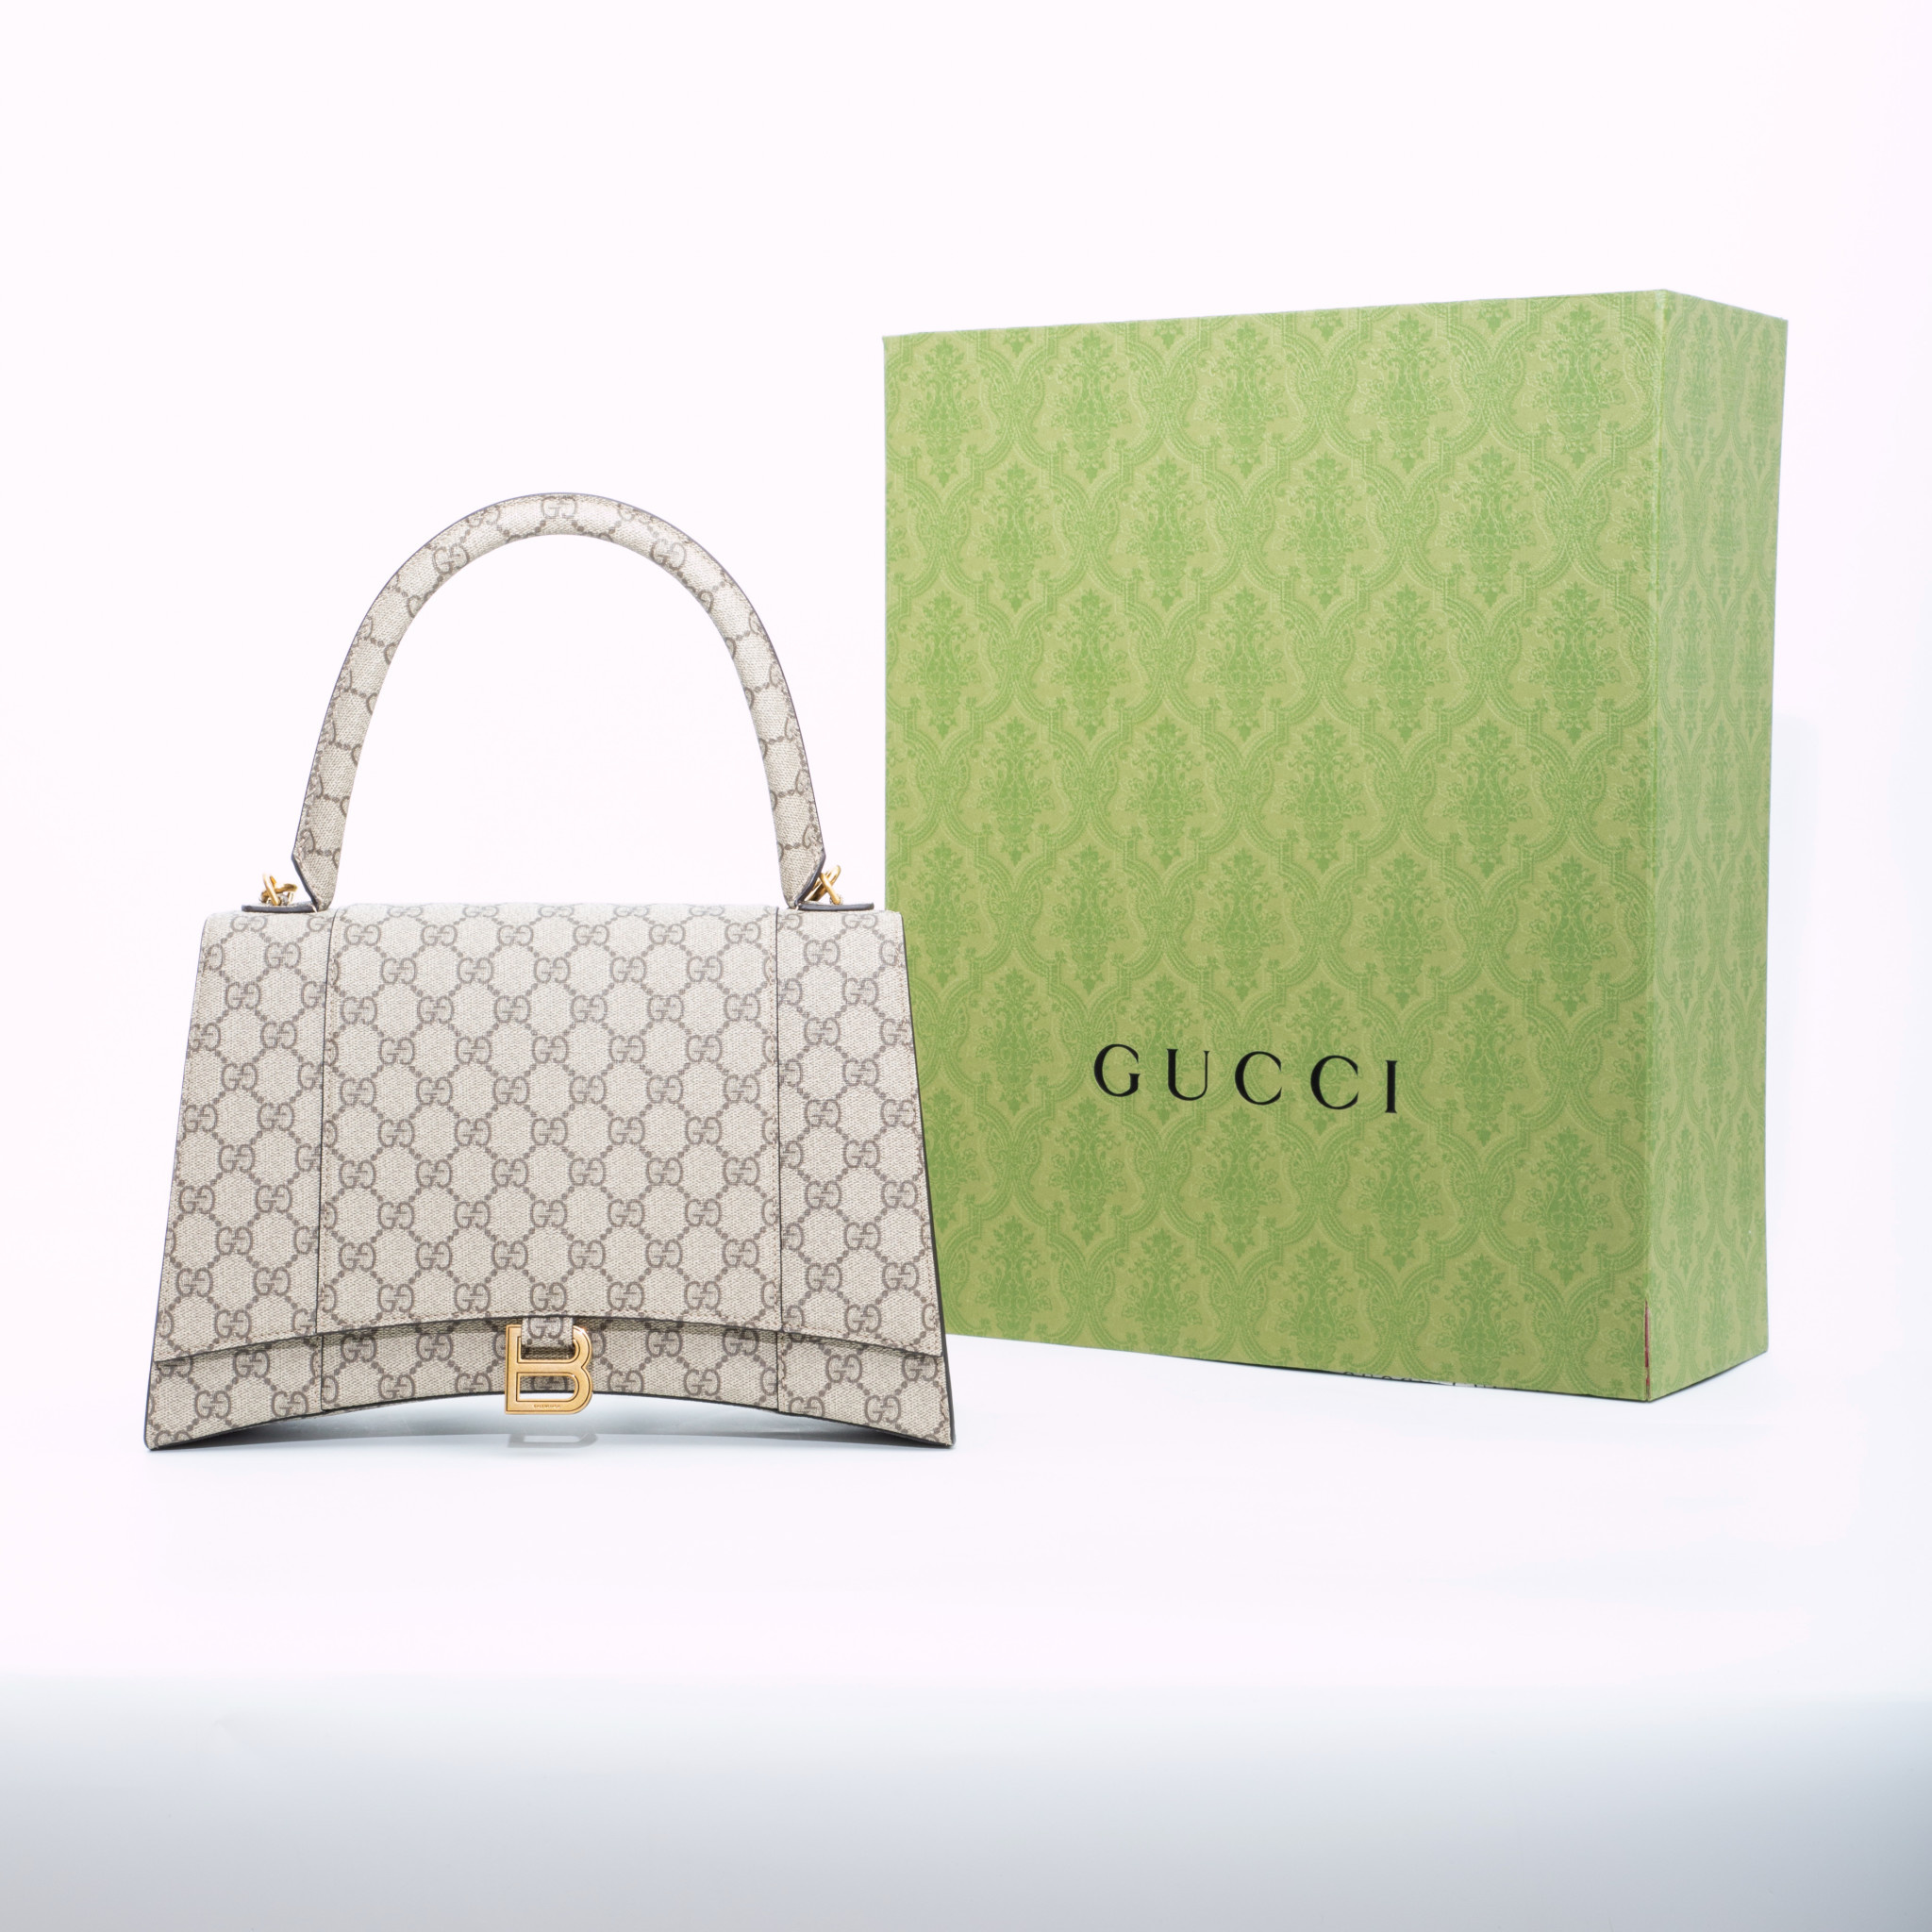 Gucci x Balenciaga bag